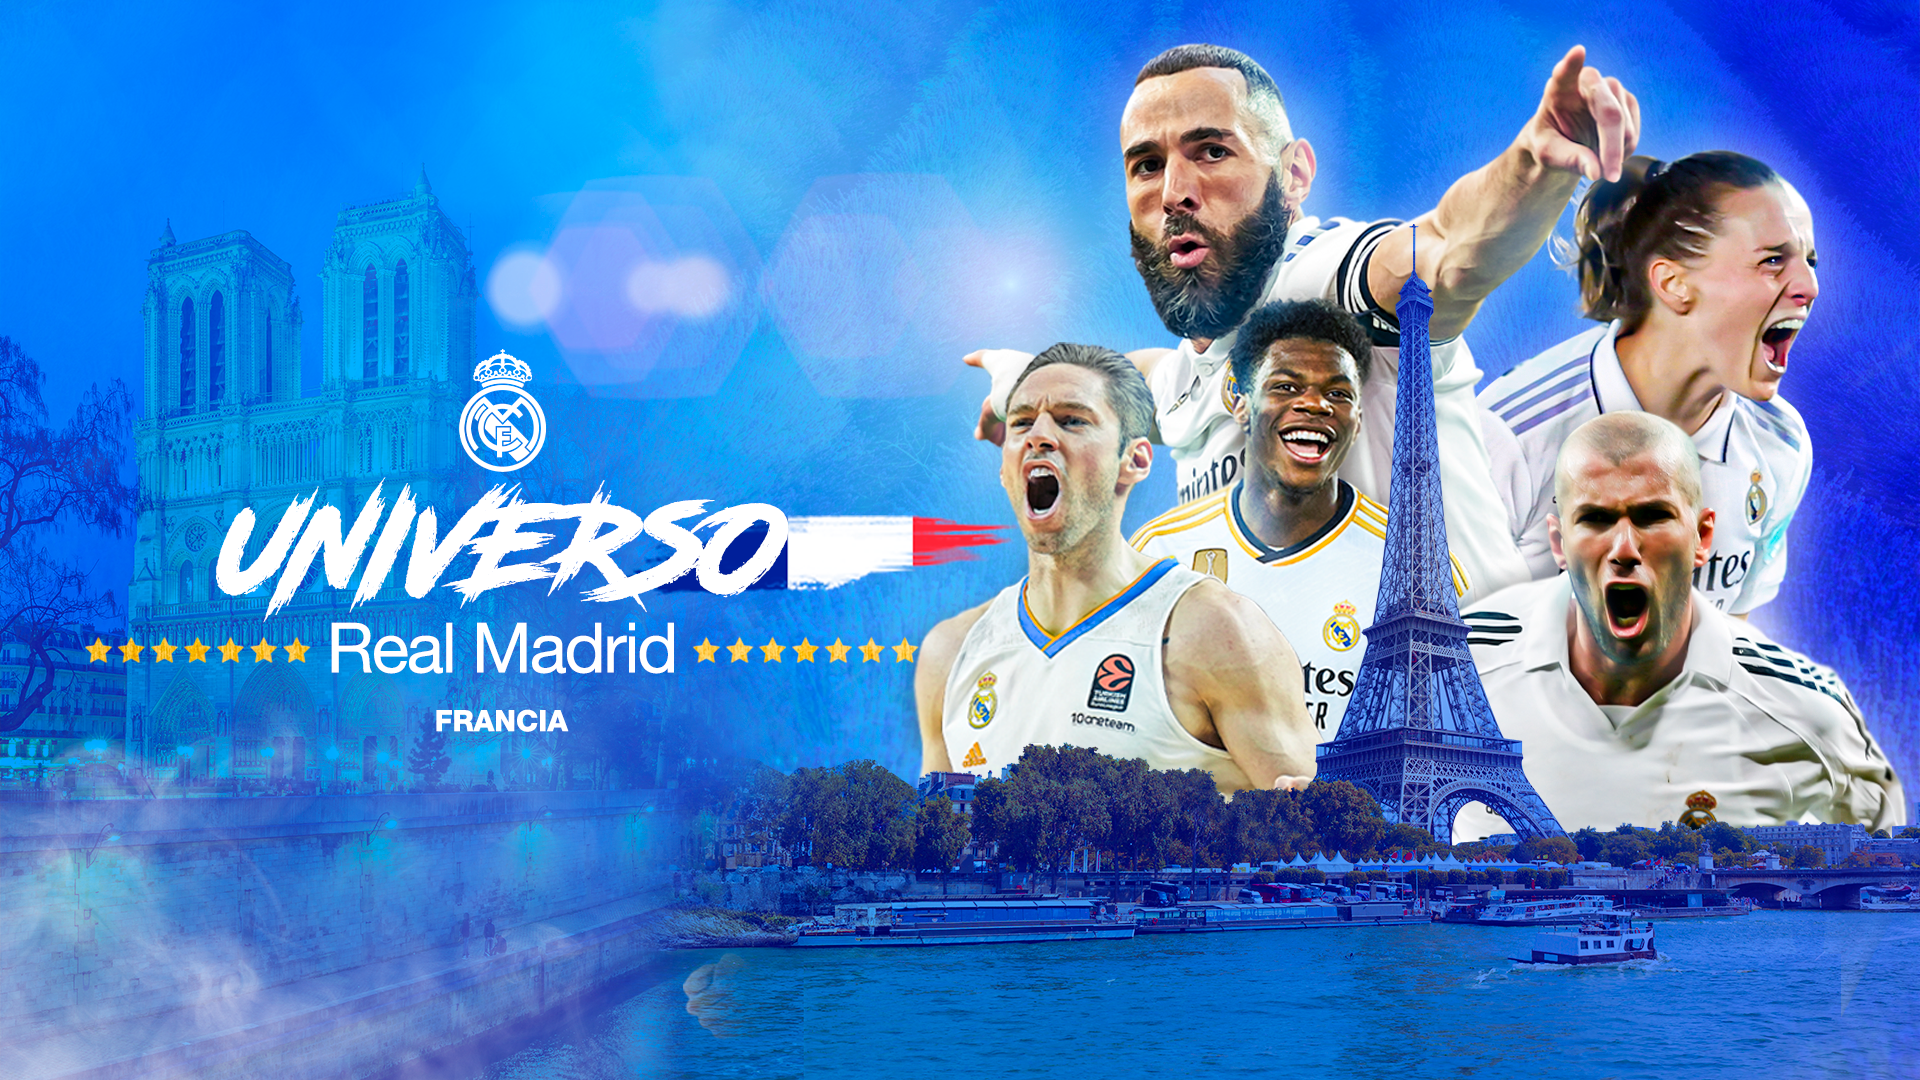 ‘Universo Real Madrid: Francia’, sur RM Play